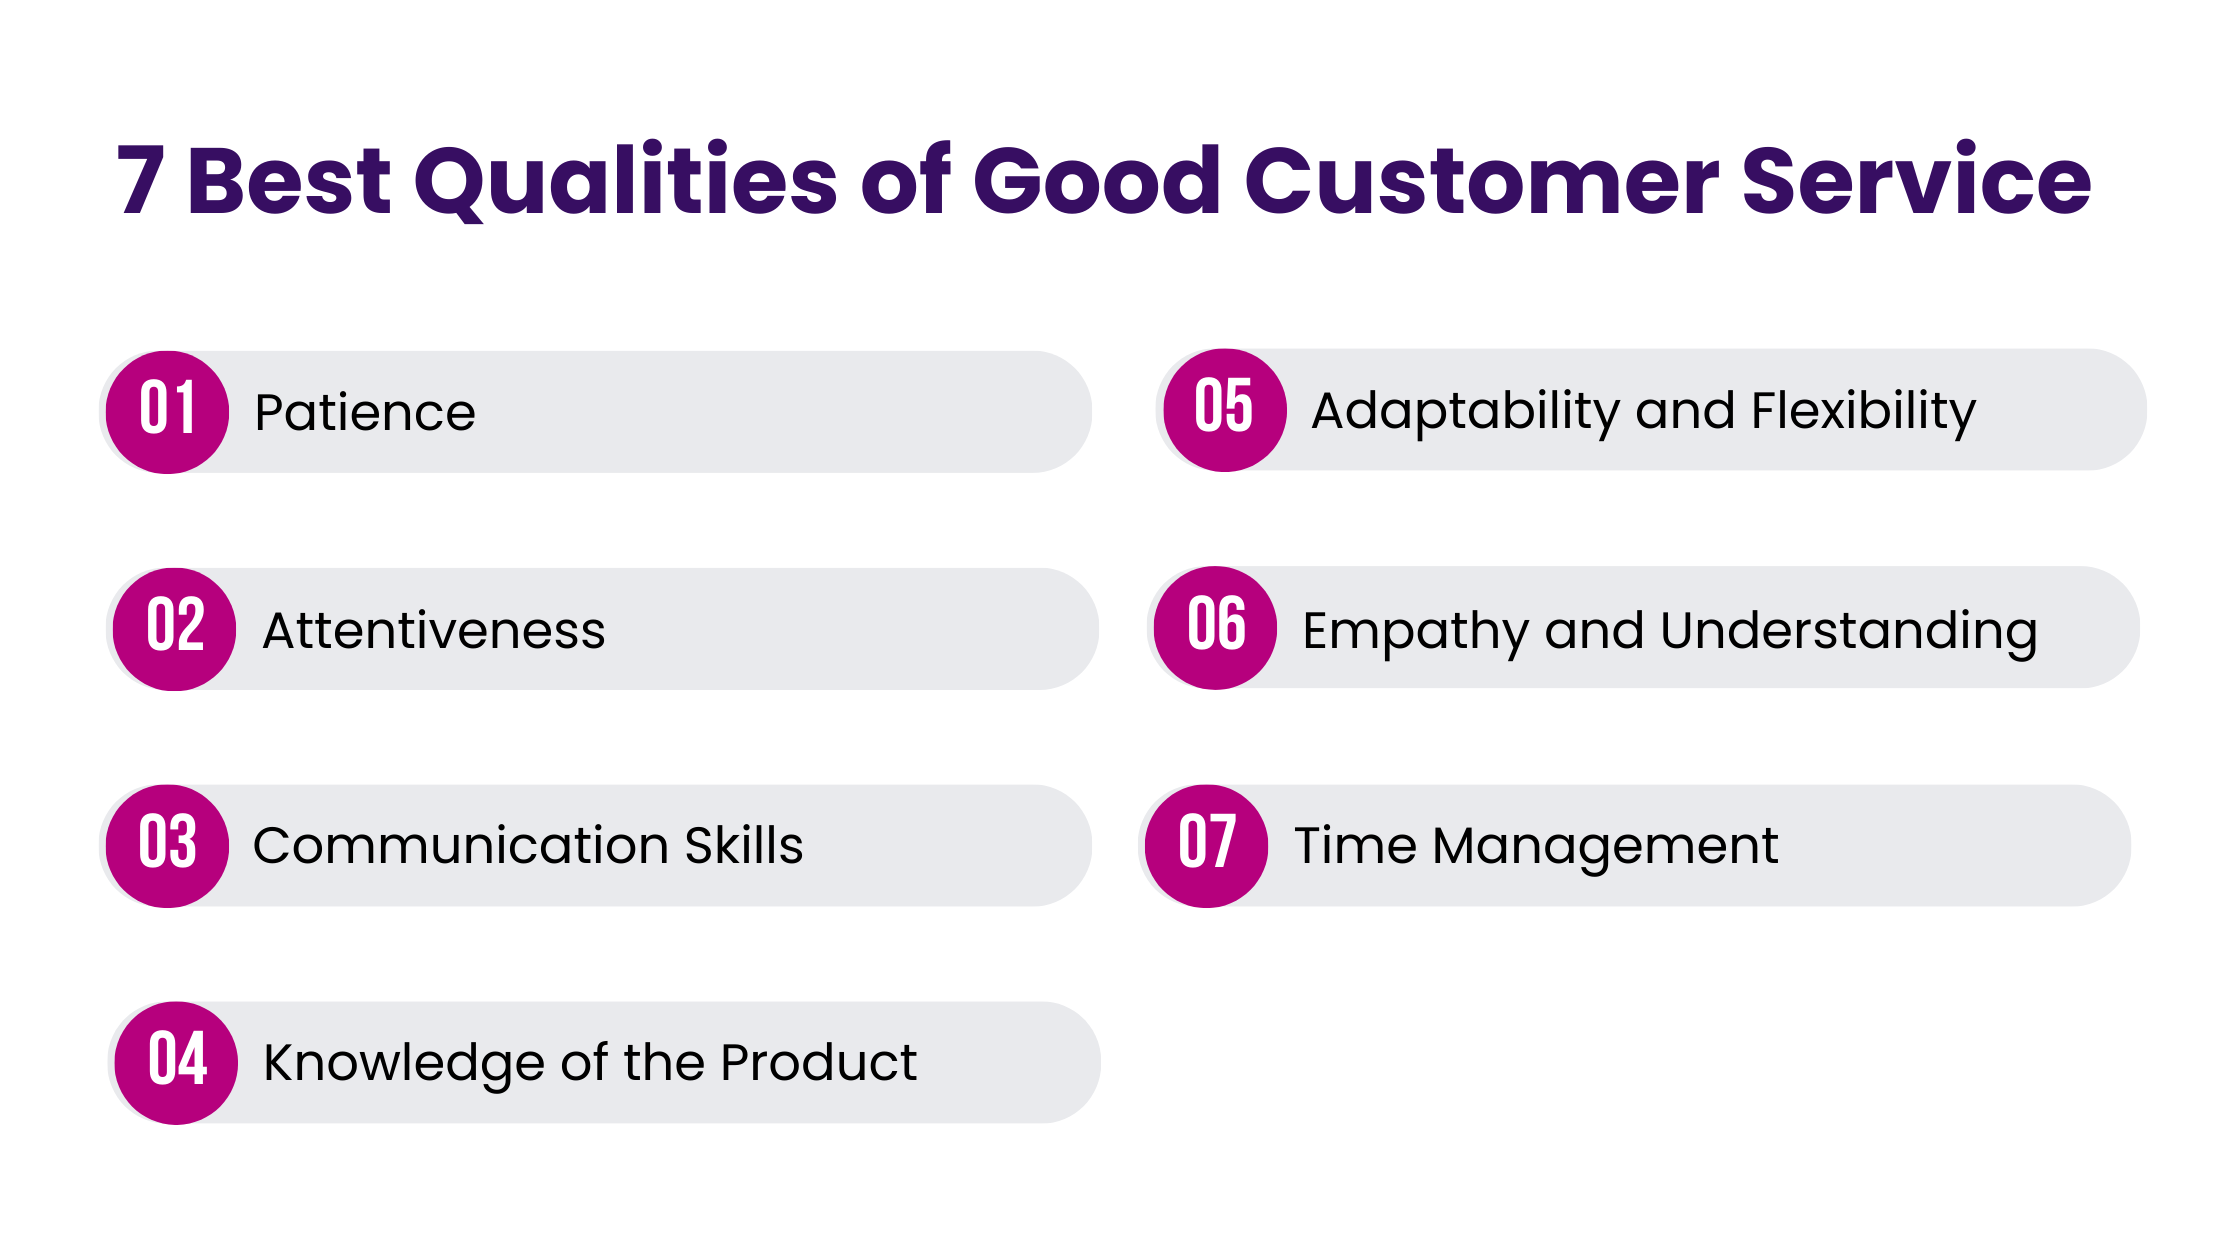 7 Best Qualities of Good Customer Service